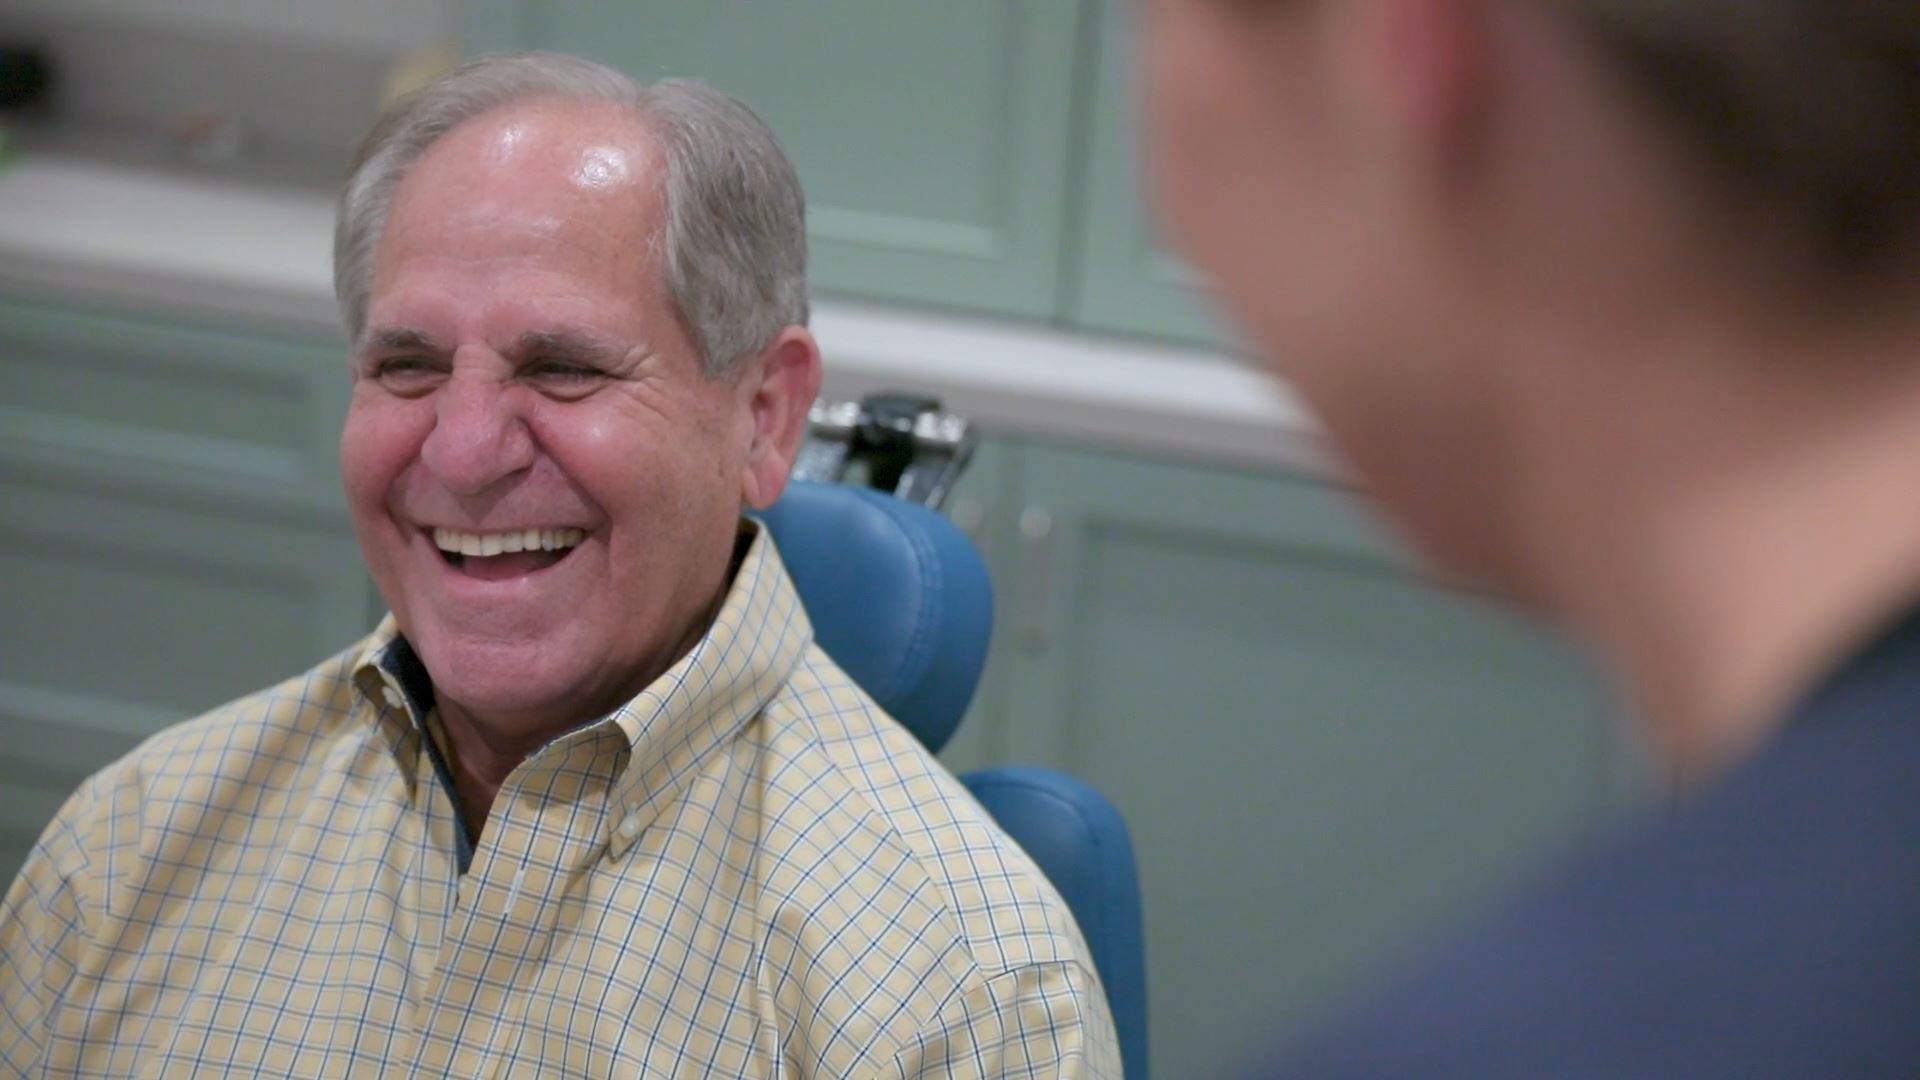 Dental Implant Patient Smiling After His Procedure